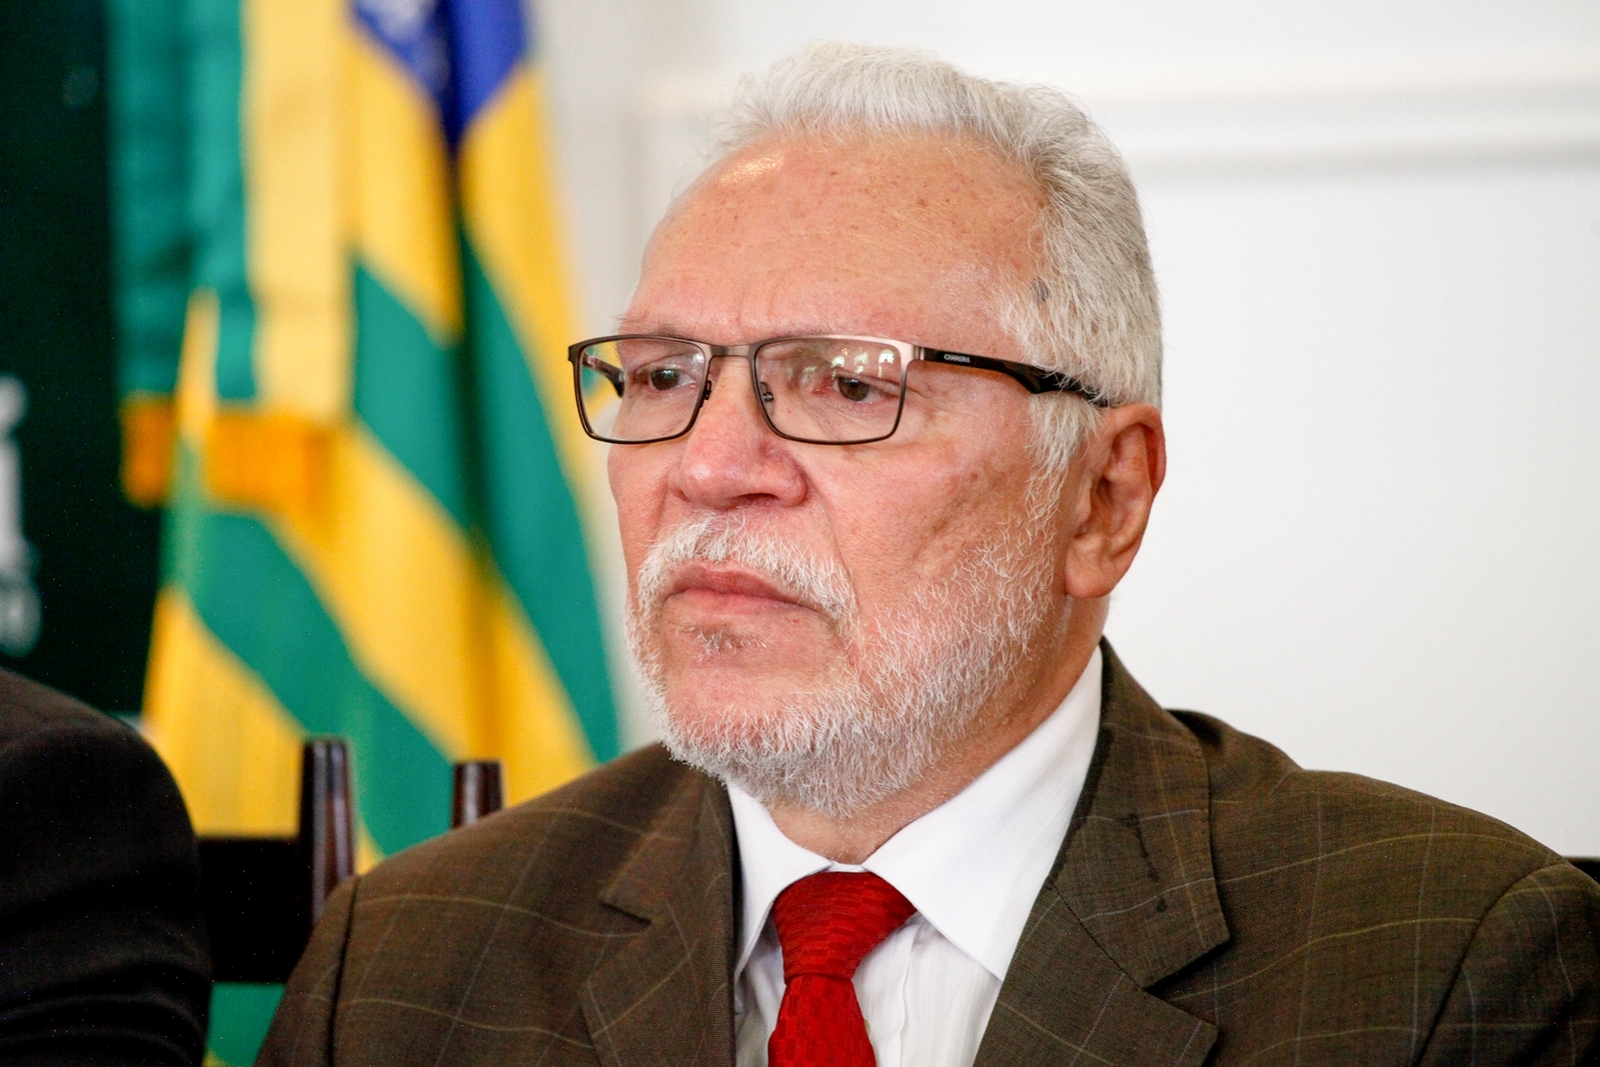 Antônio José Medeiros